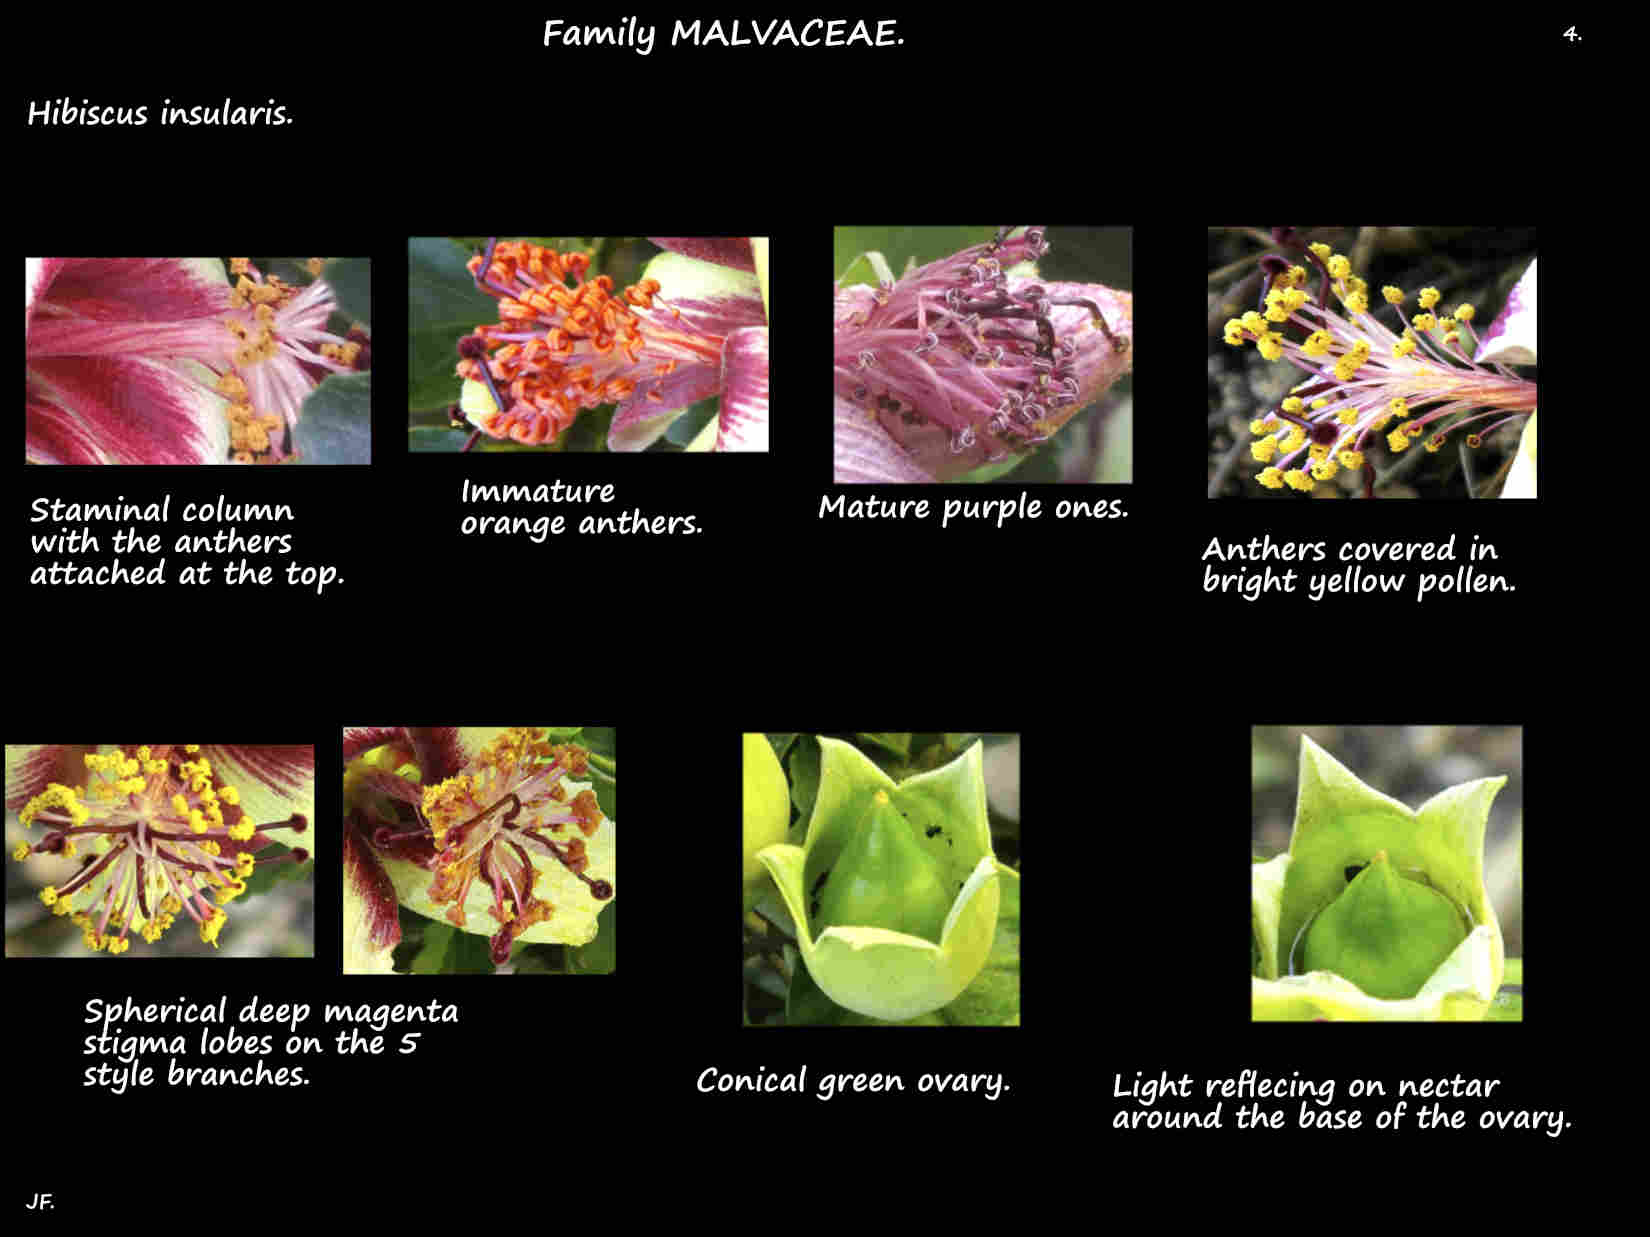 4 Hibiscus insularis stamens & ovary